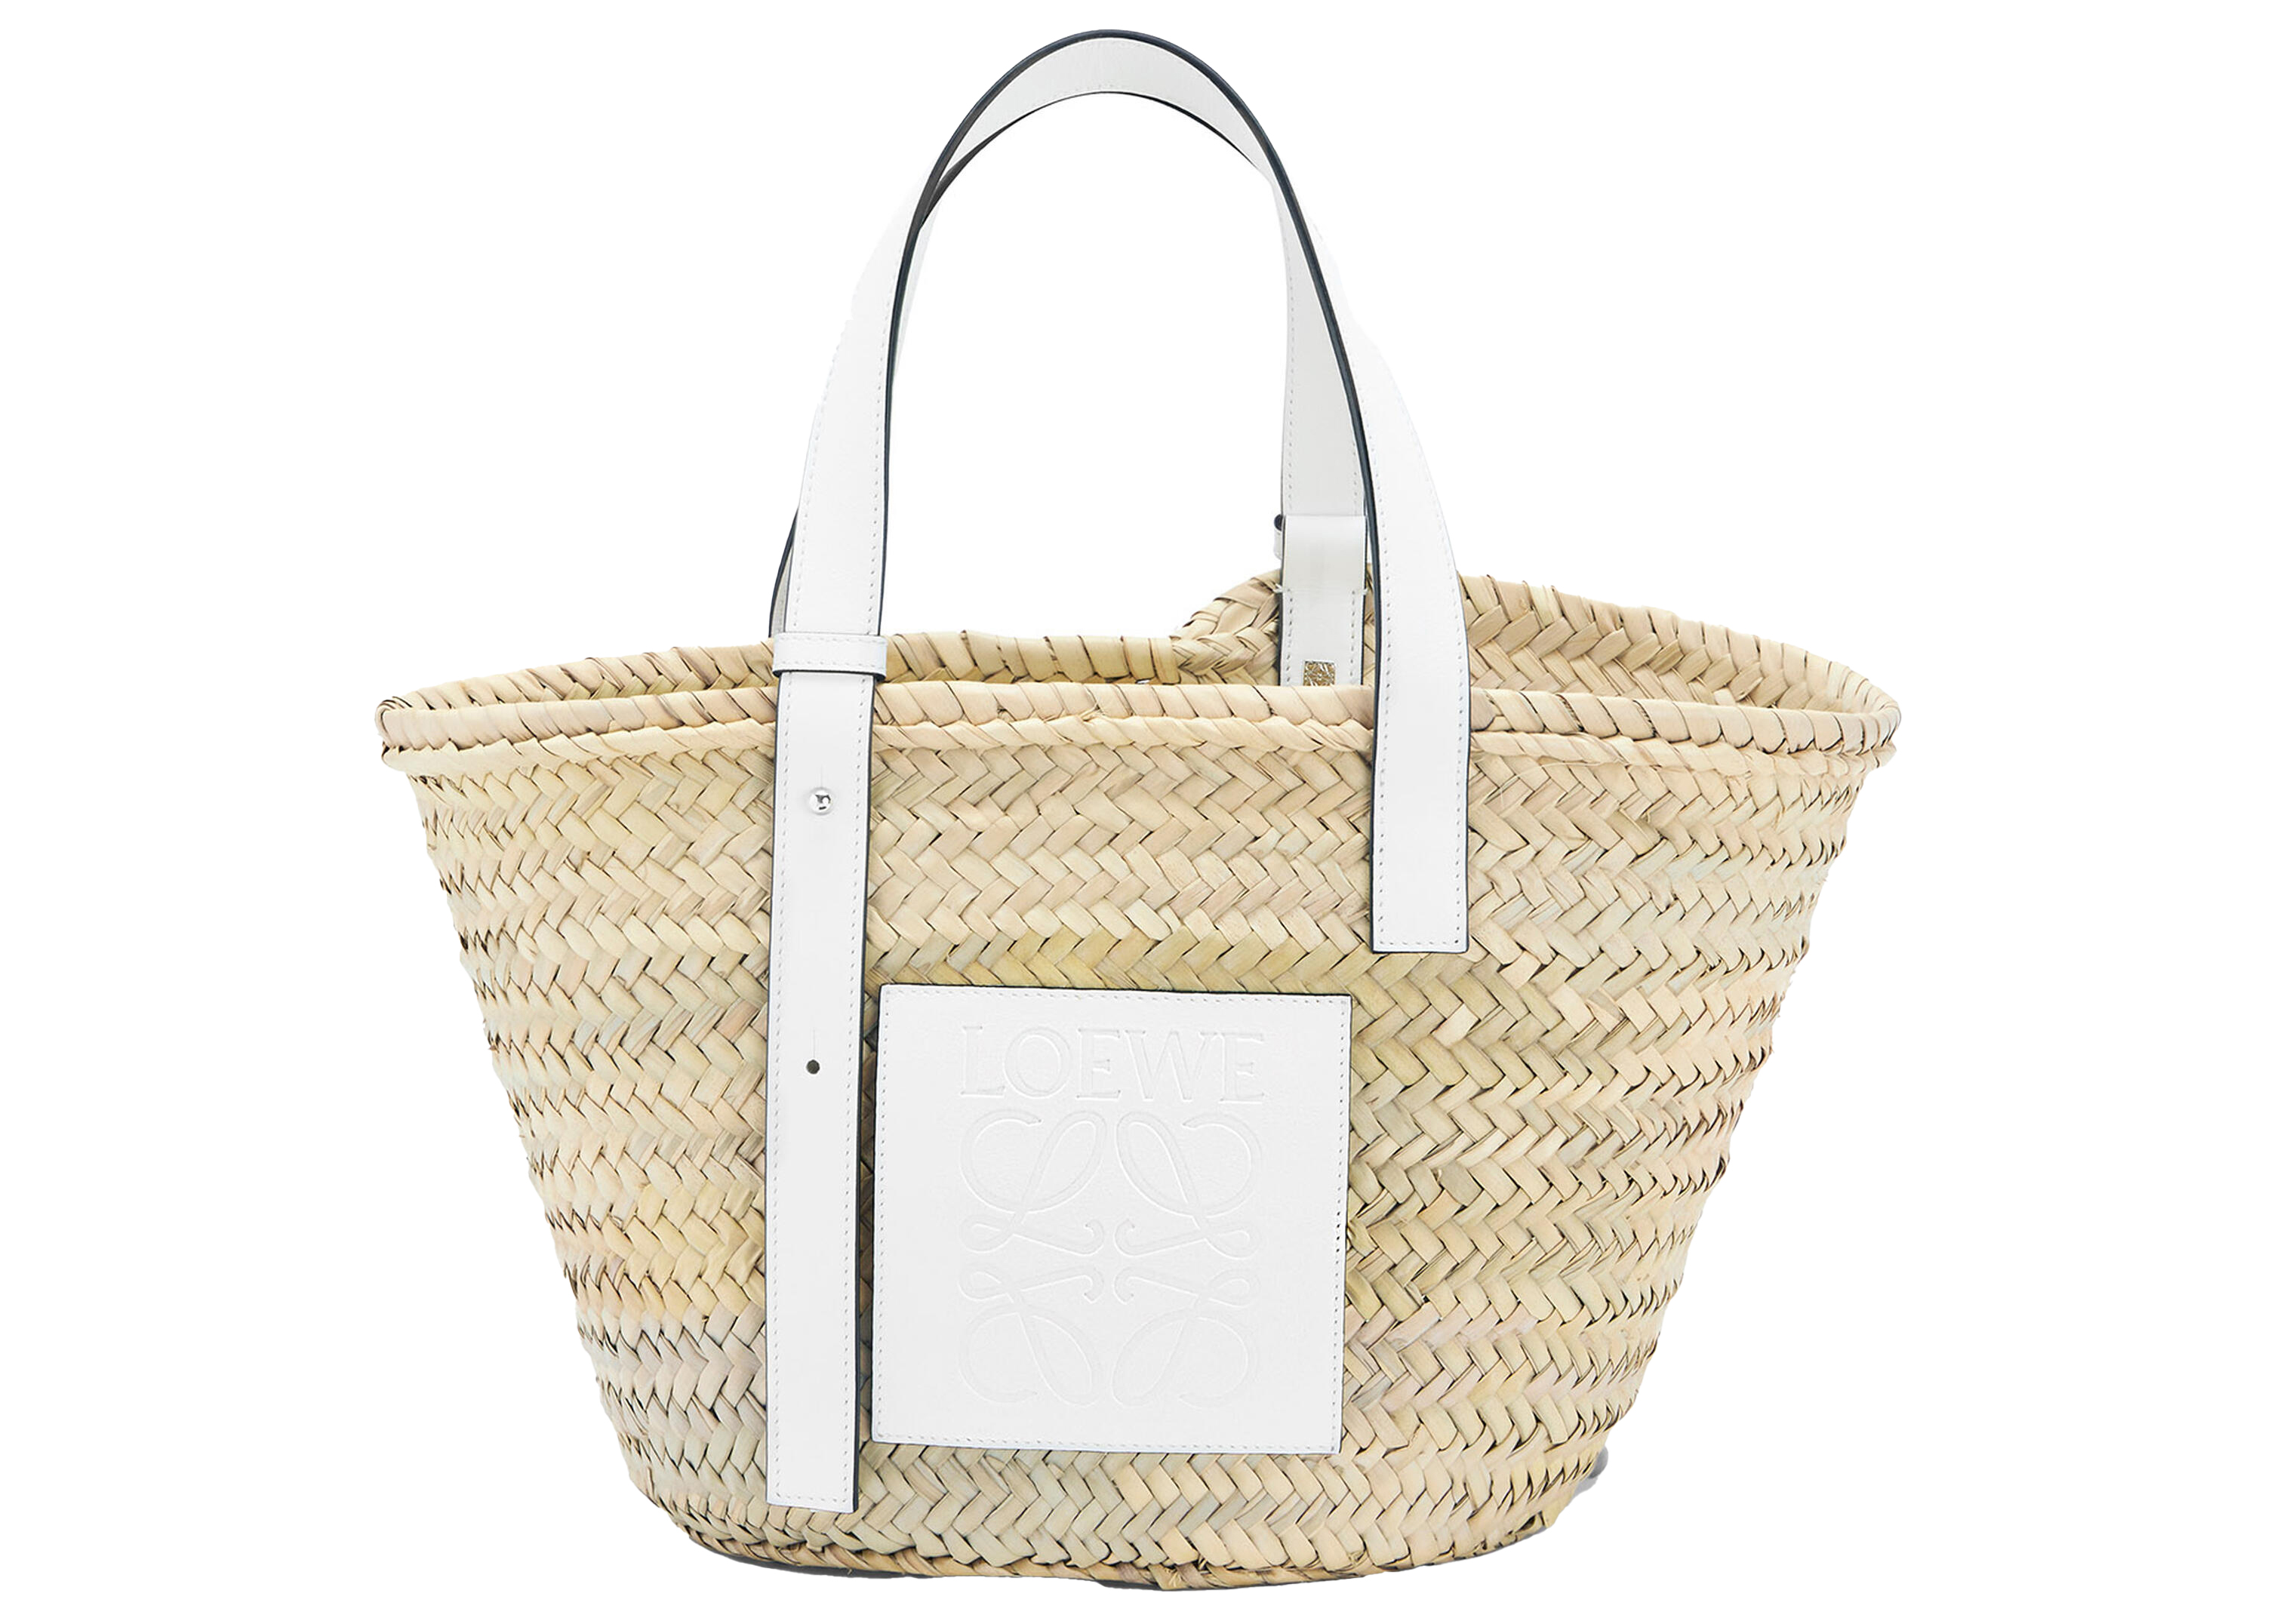 Loewe Basket Bag in Palm Leaf and Calfskin Natural/White